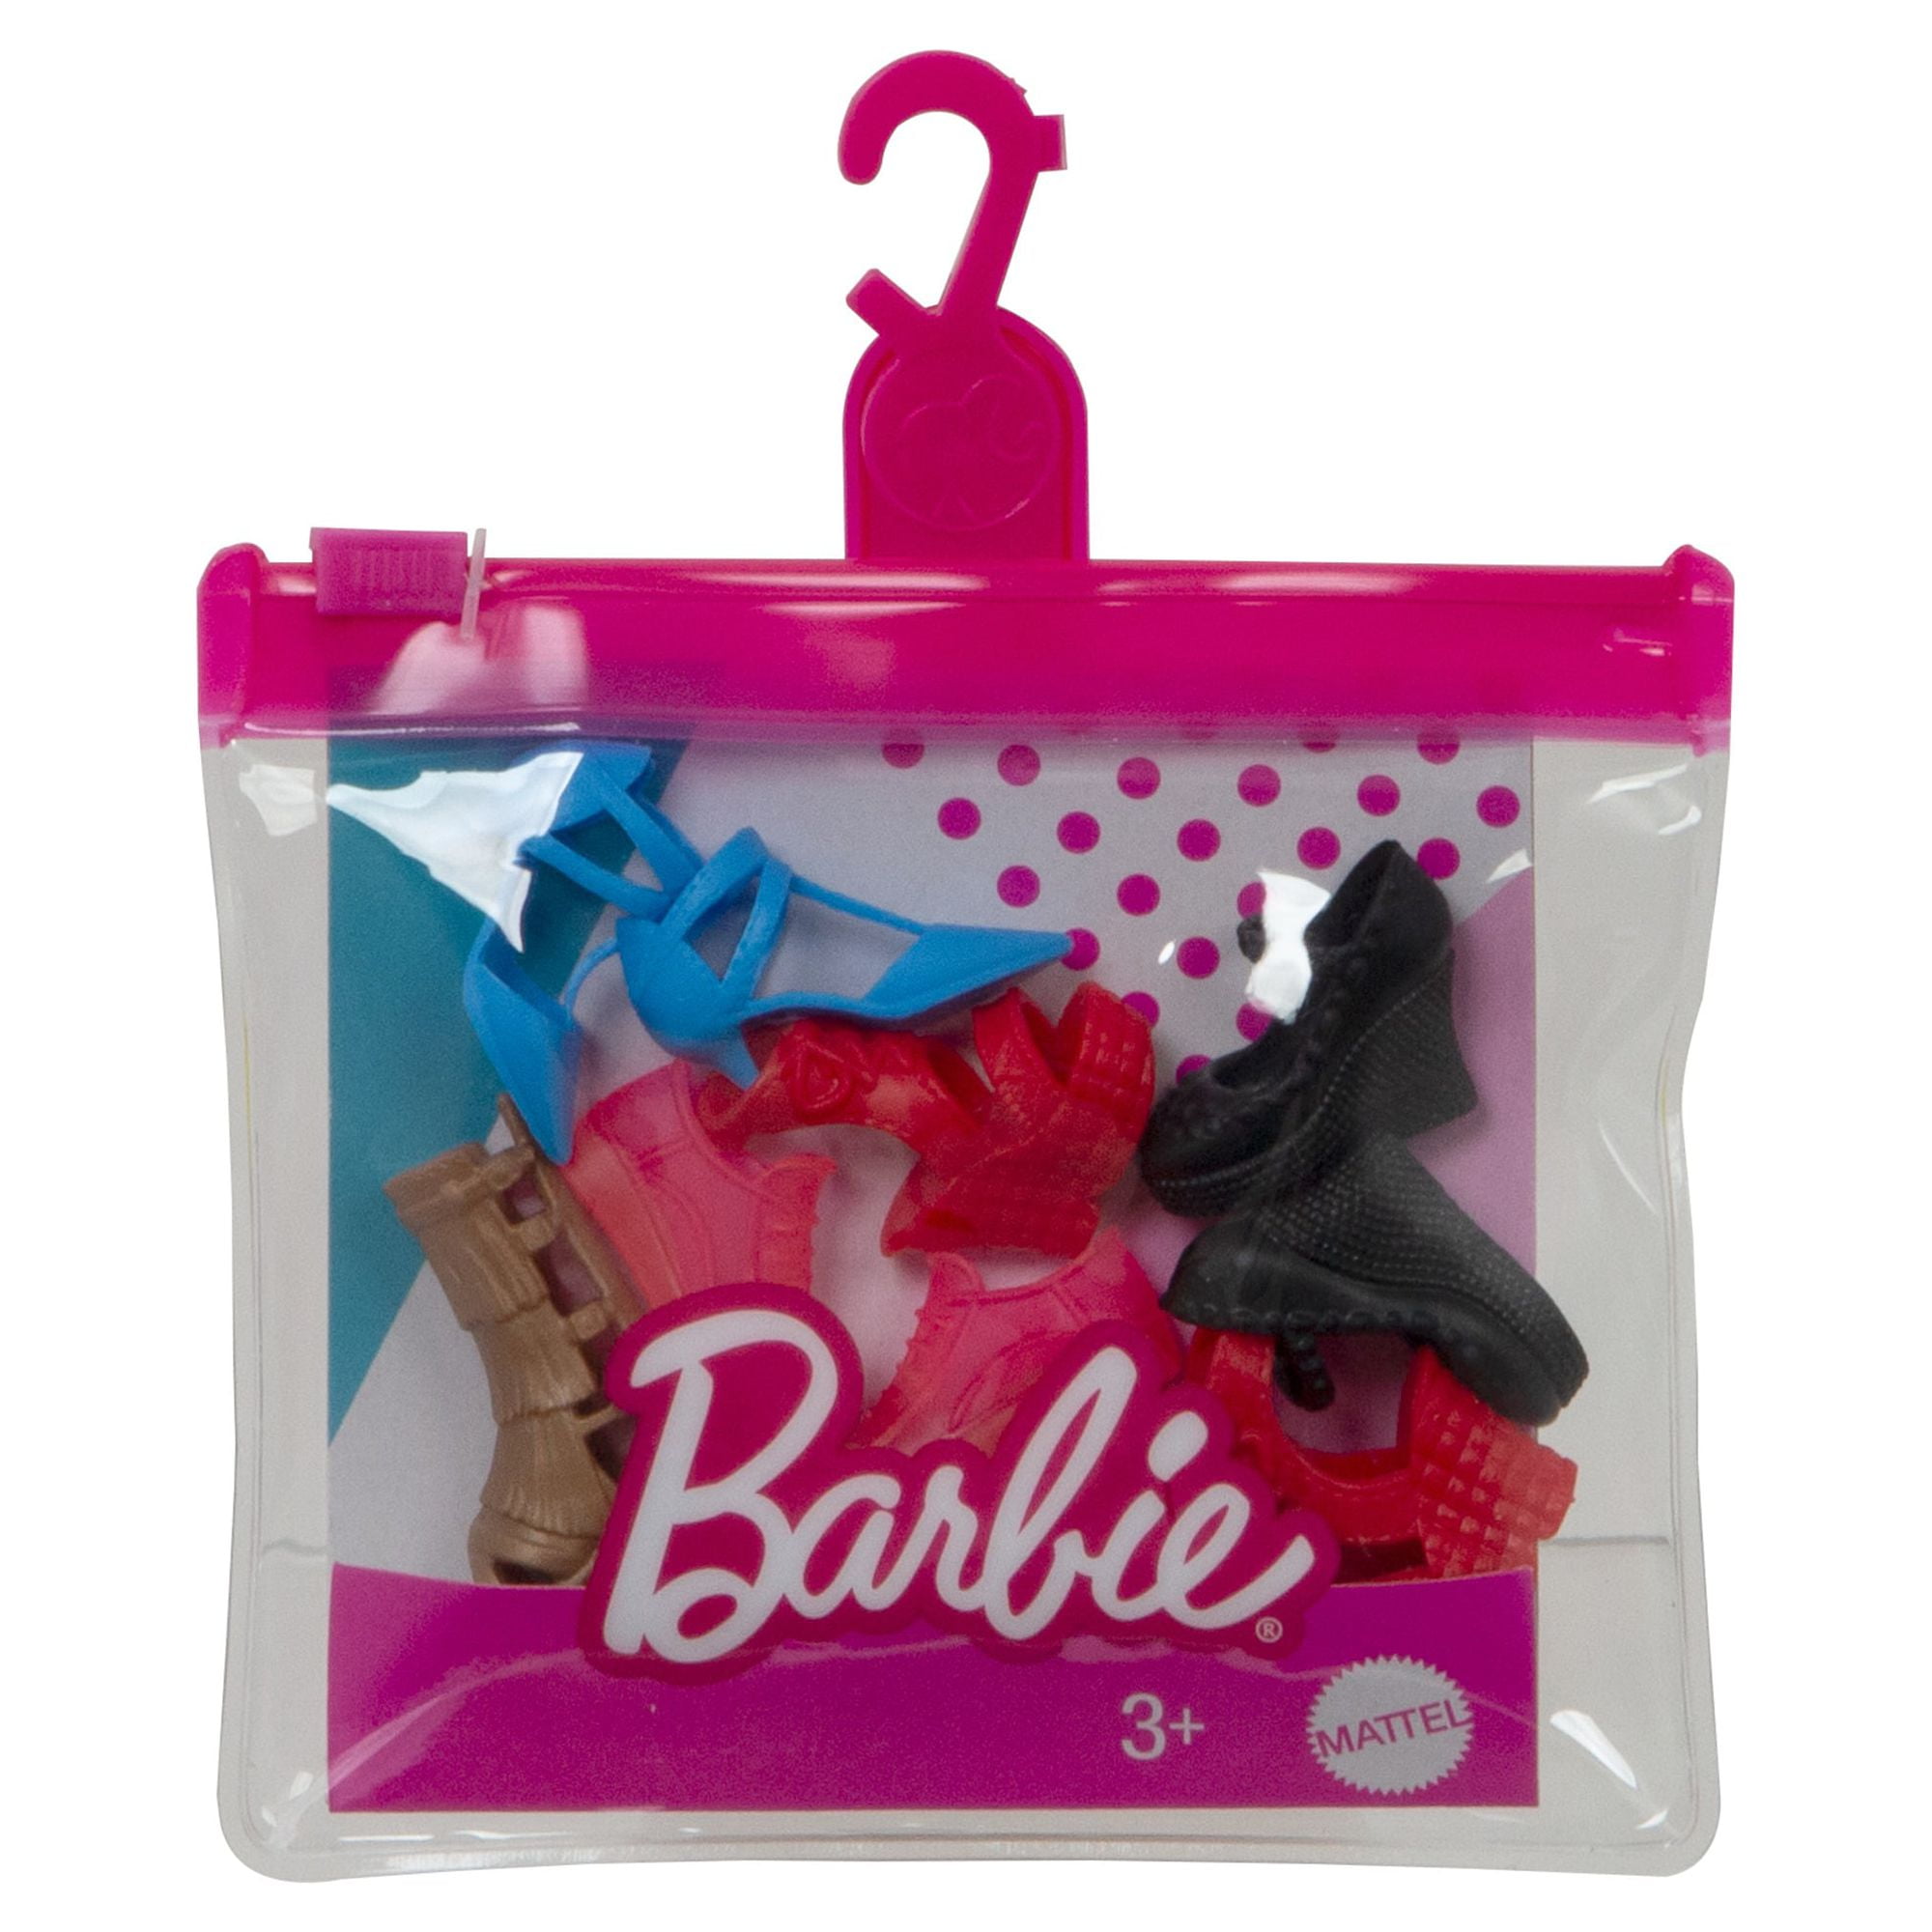 Barbie Boots Shoes Dolls, Shoes Barbie Doll Pack